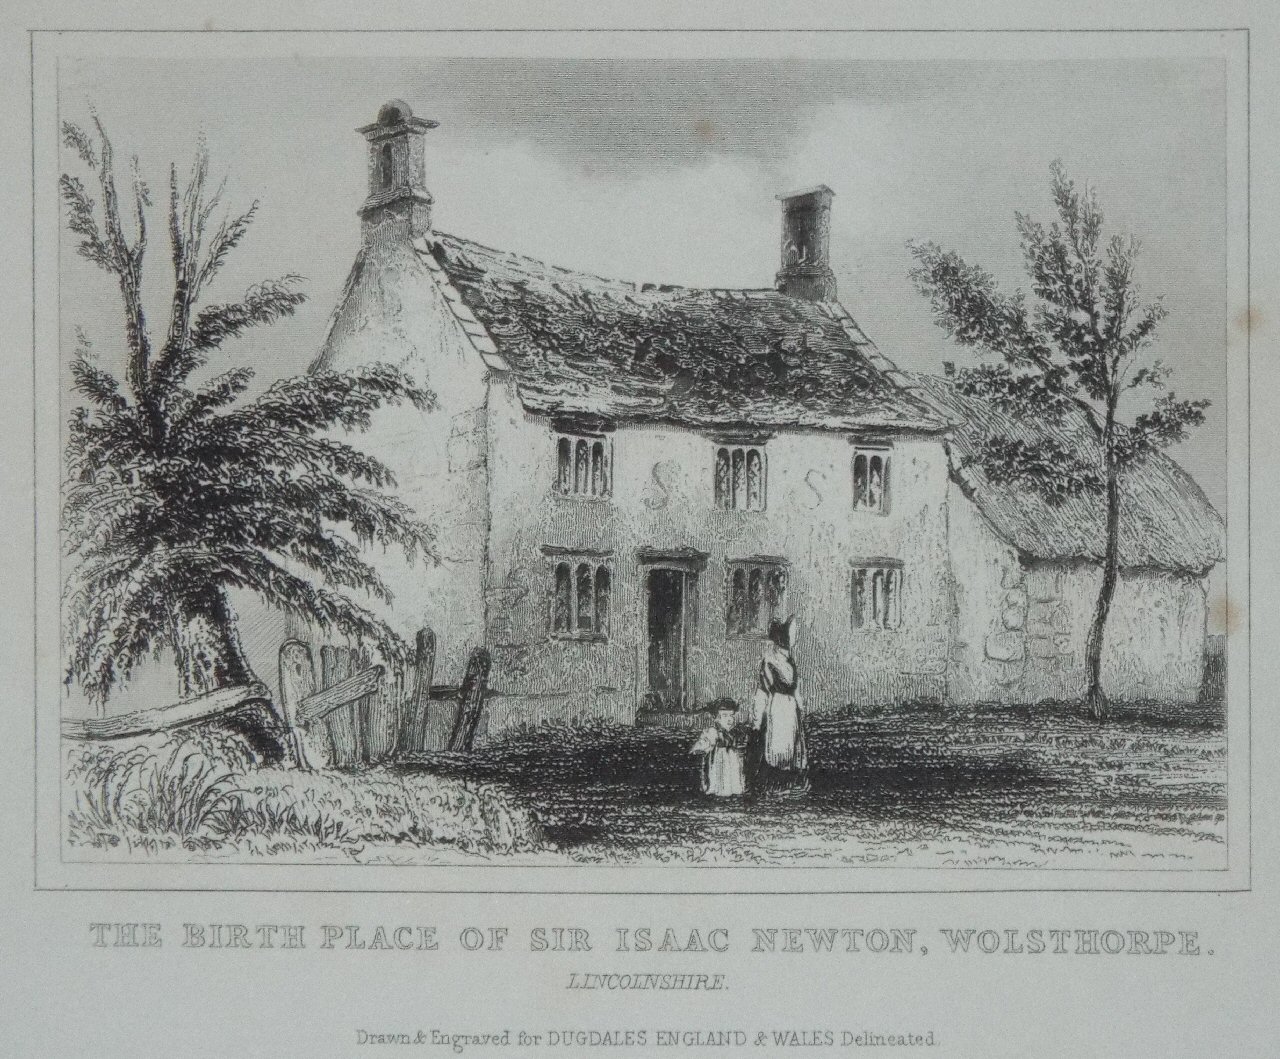 Print - Birth Place of Sir Isaac Newton, Wolsthorpe. Lincolnshire.